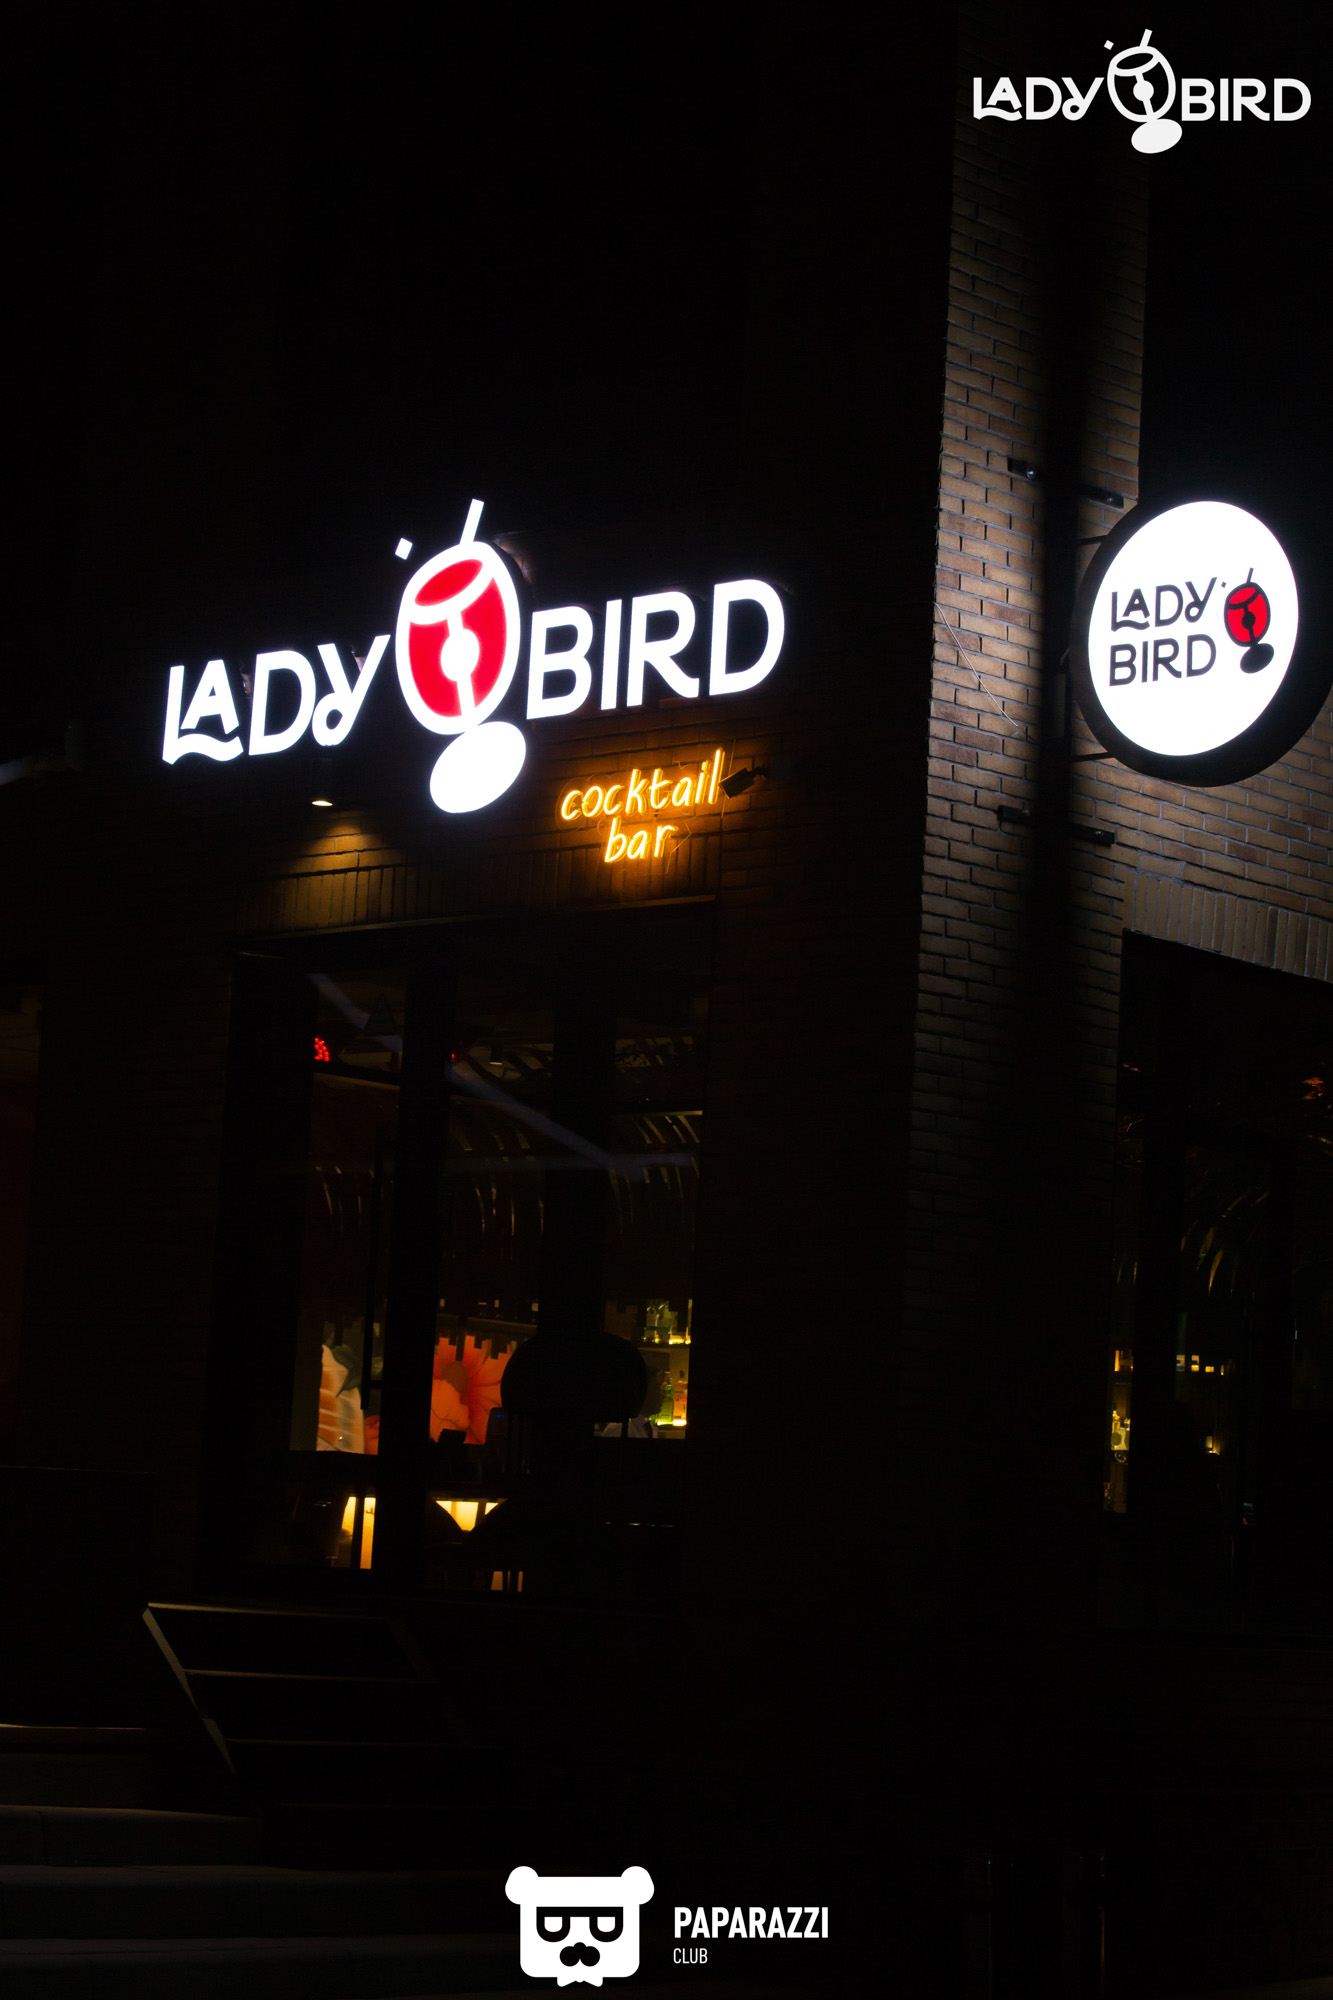 "LADY BIRD"